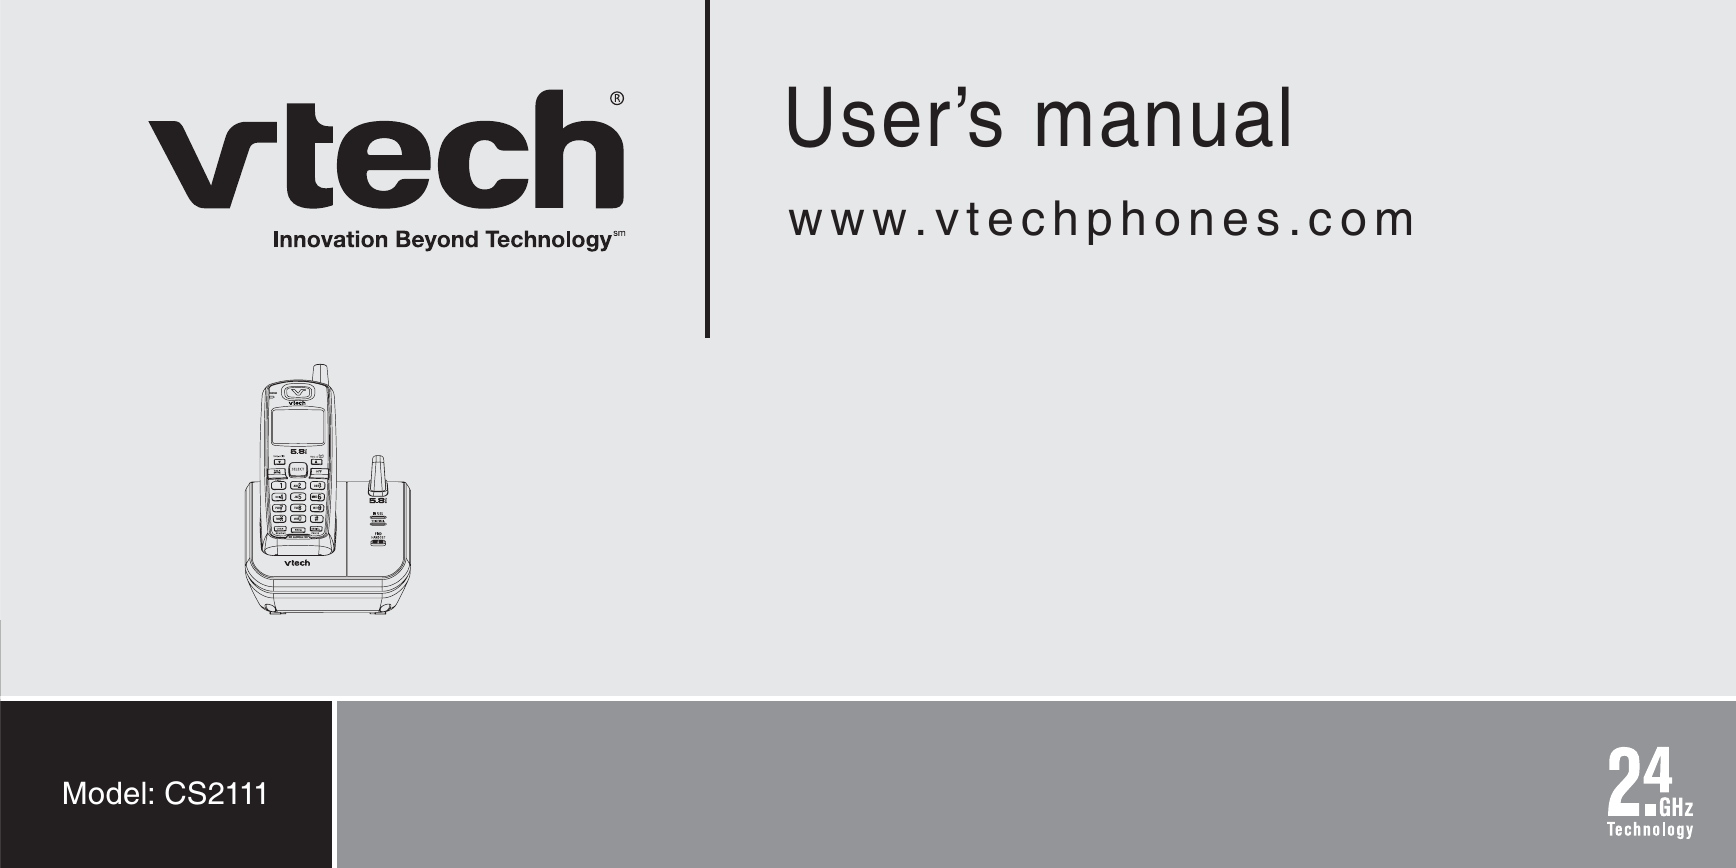 User’s manualwww.vtechphones.comModel: CS2111CHARGEOPERDEFJKLPQRSWXYZTUVMNOTONEABC